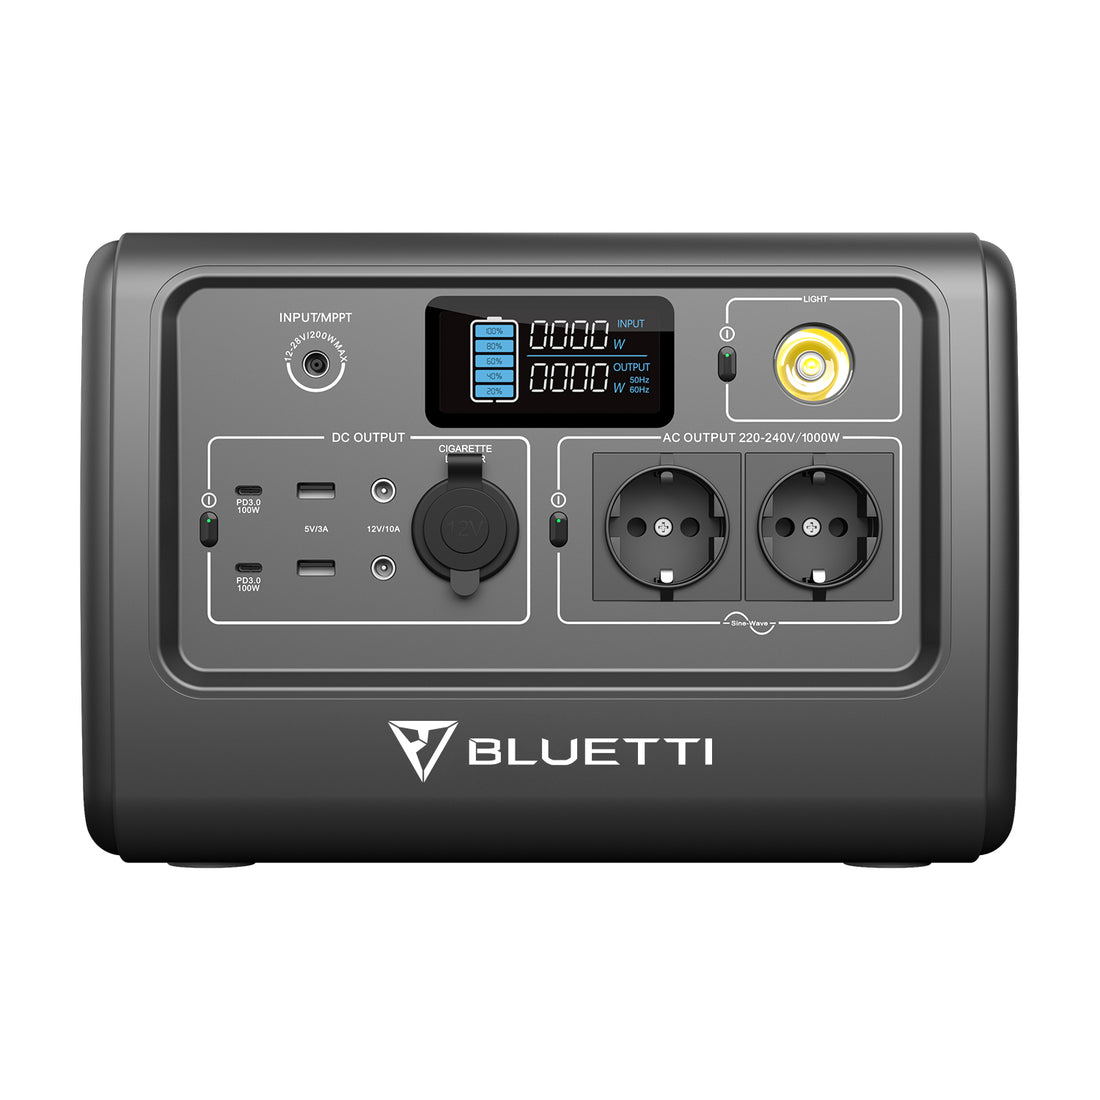 BLUETTI EB70 Portable Power Station Solar Generator Review - Camera Jabber